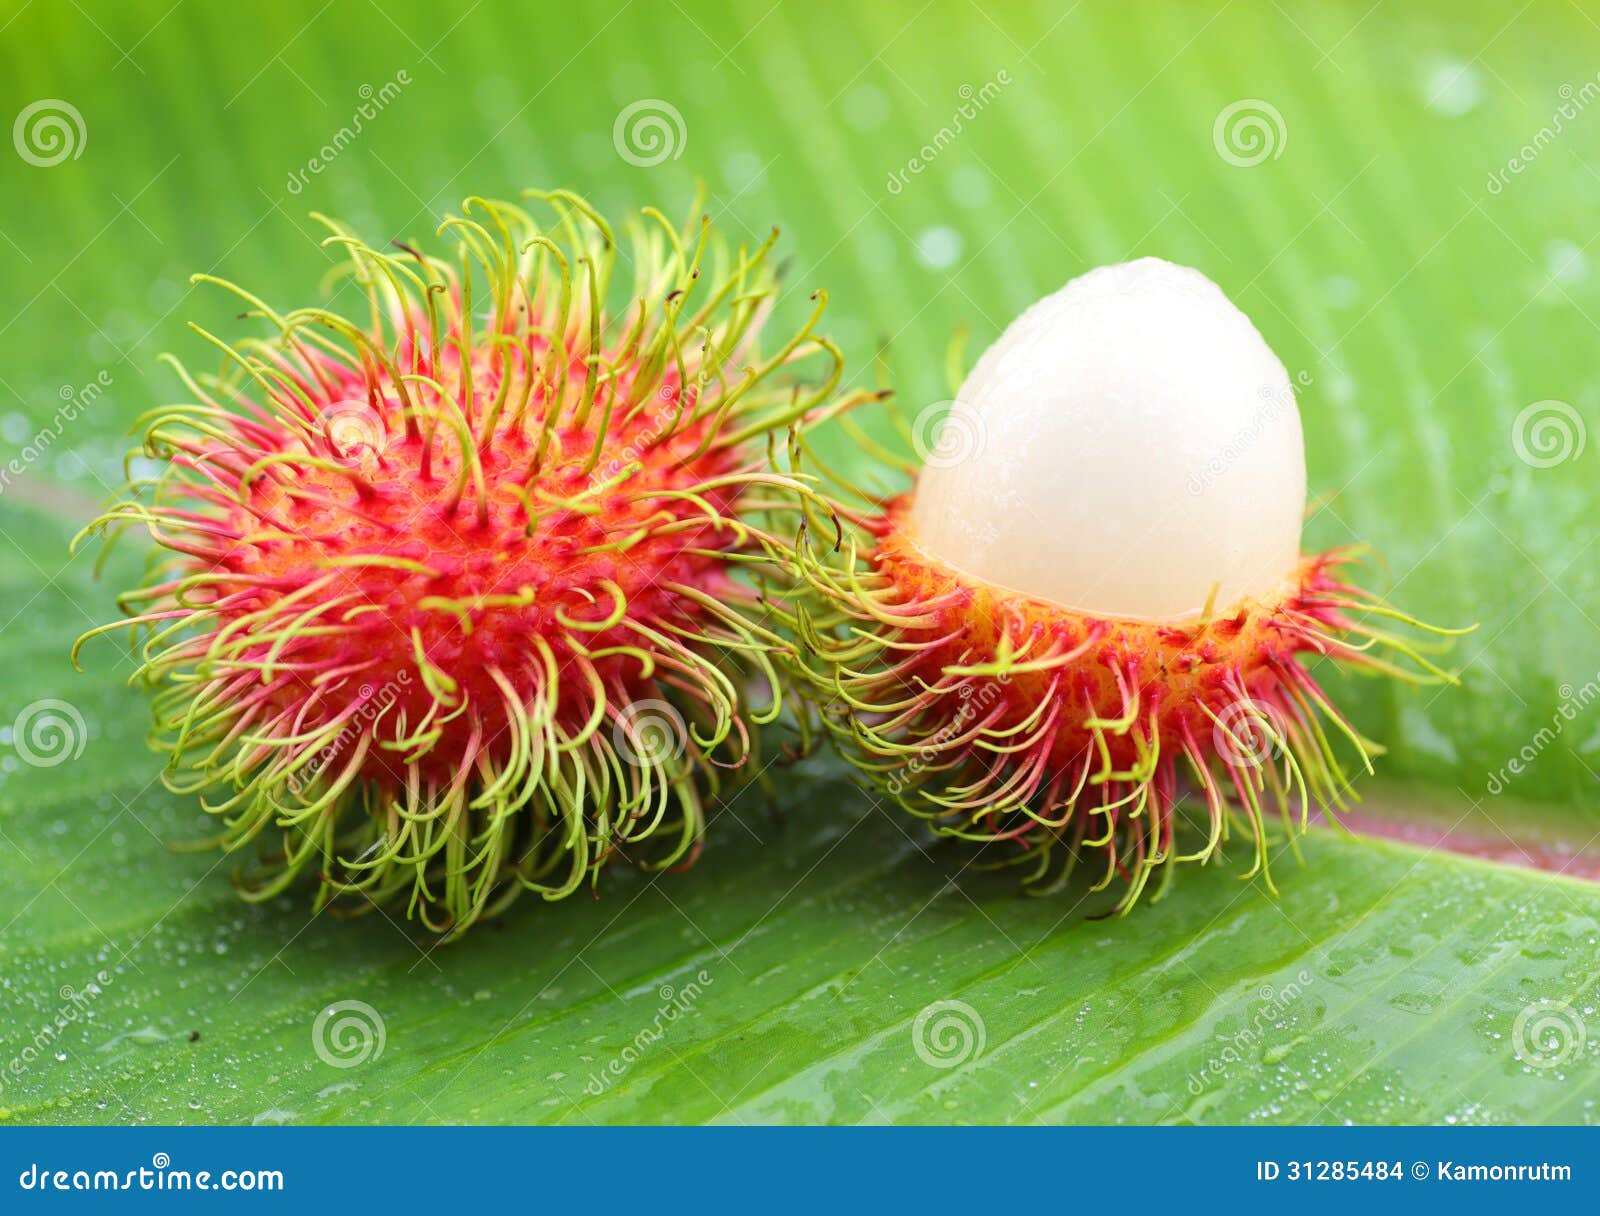 asian fruit rambutan stock photo. image of green, fresh - 31285484